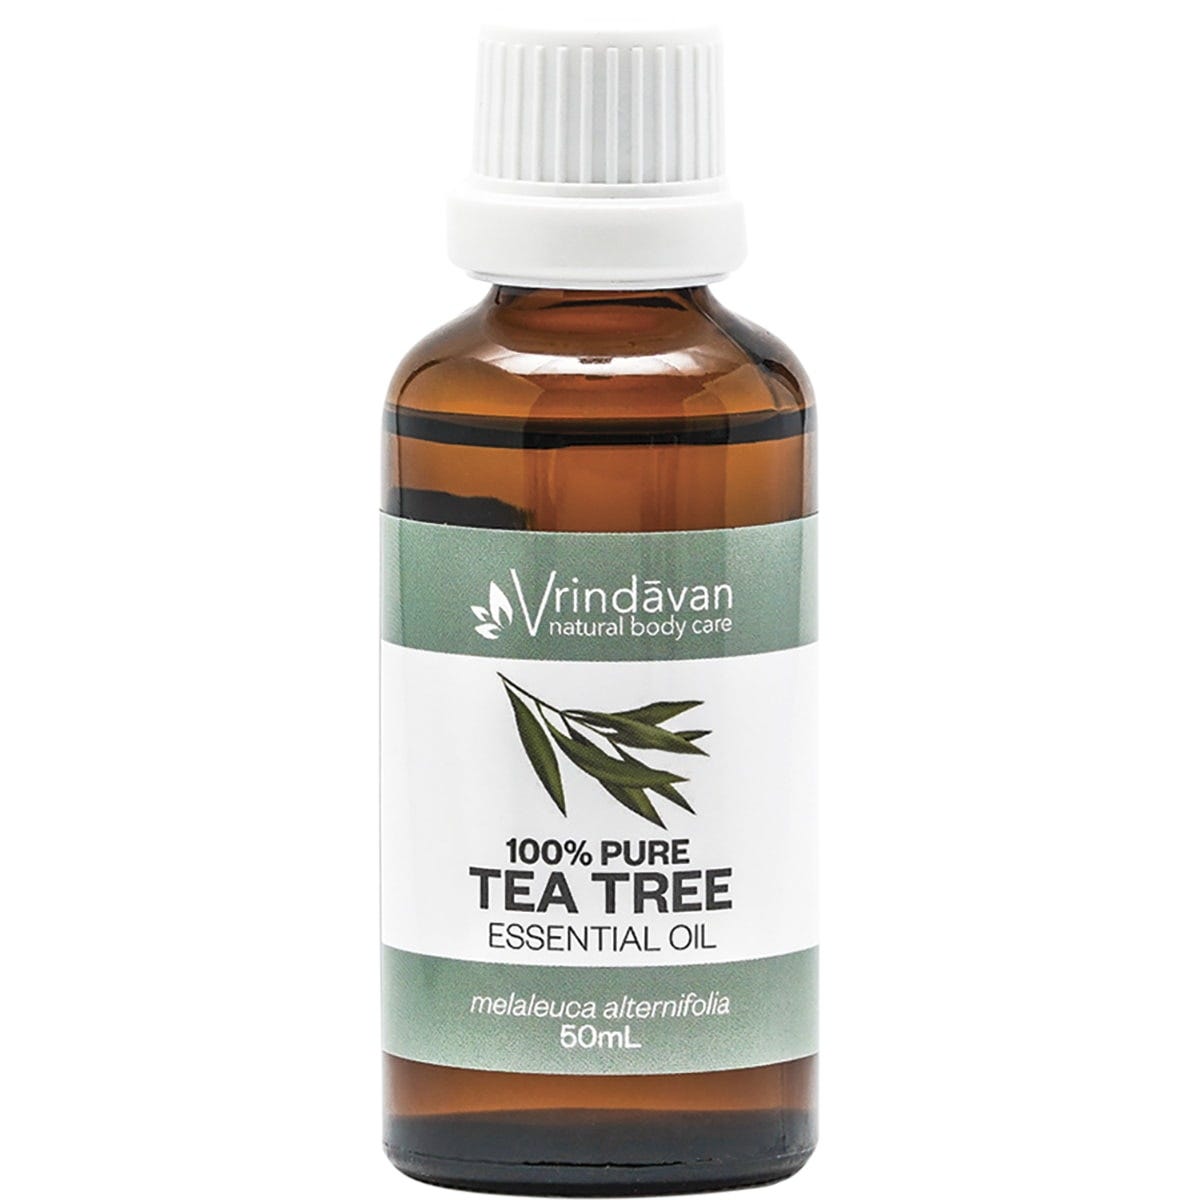 Vrindavan Essential Oil 100% Tea Tree 50ml - Dr Earth - Aromatherapy